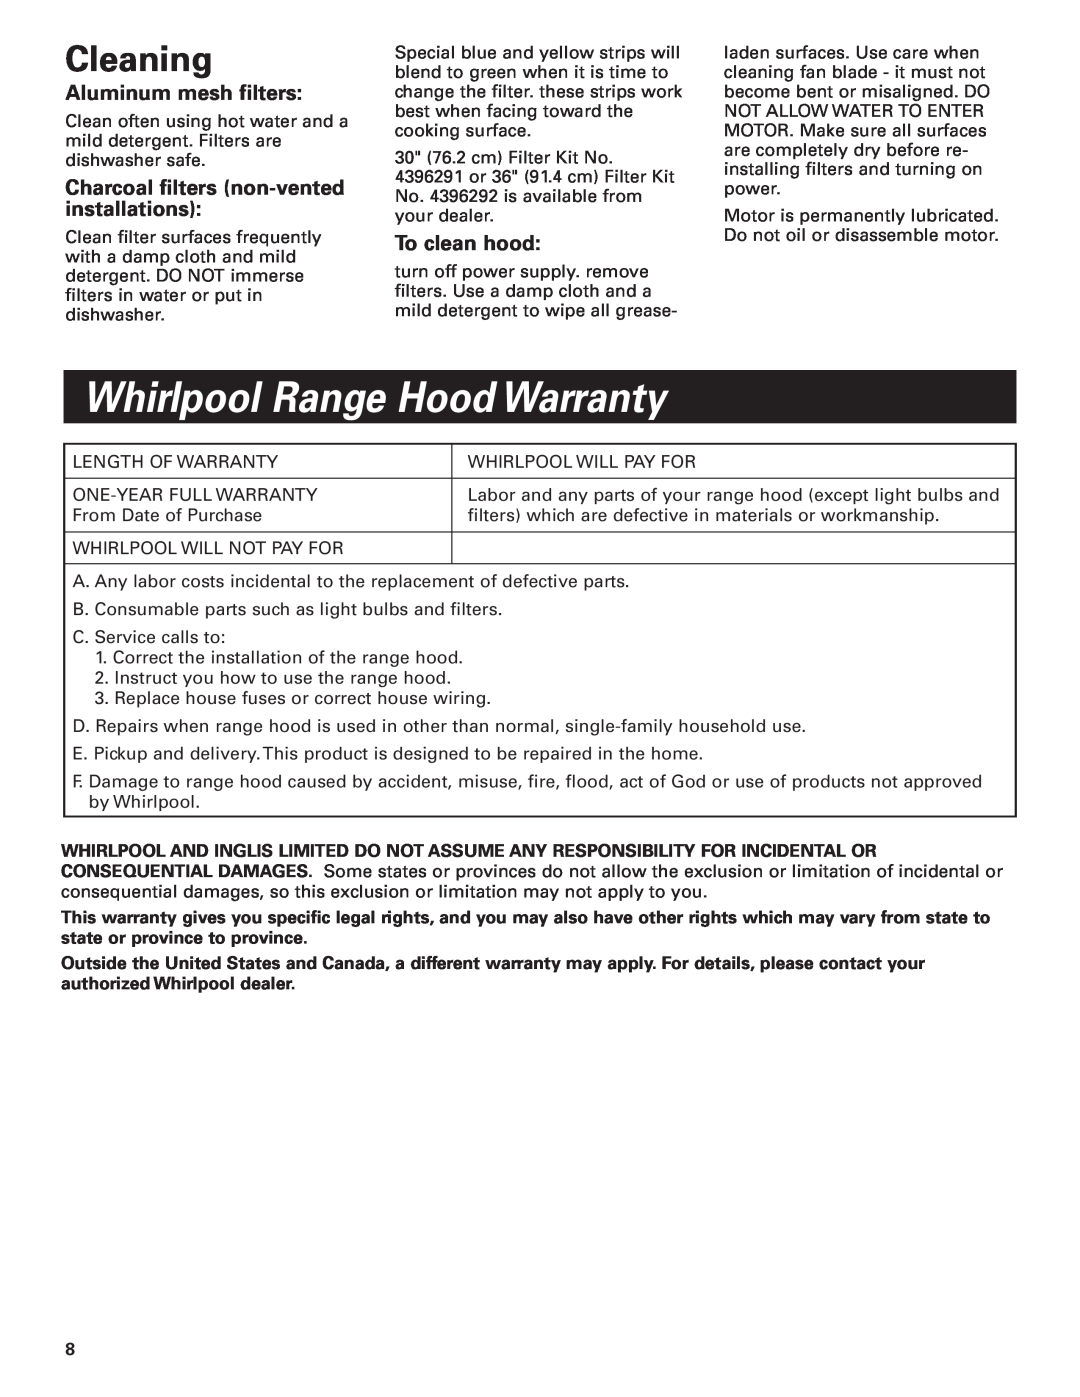 Whirlpool GZ5736 Whirlpool Range Hood Warranty, Cleaning, Aluminum mesh filters, Charcoal filters non-ventedinstallations 